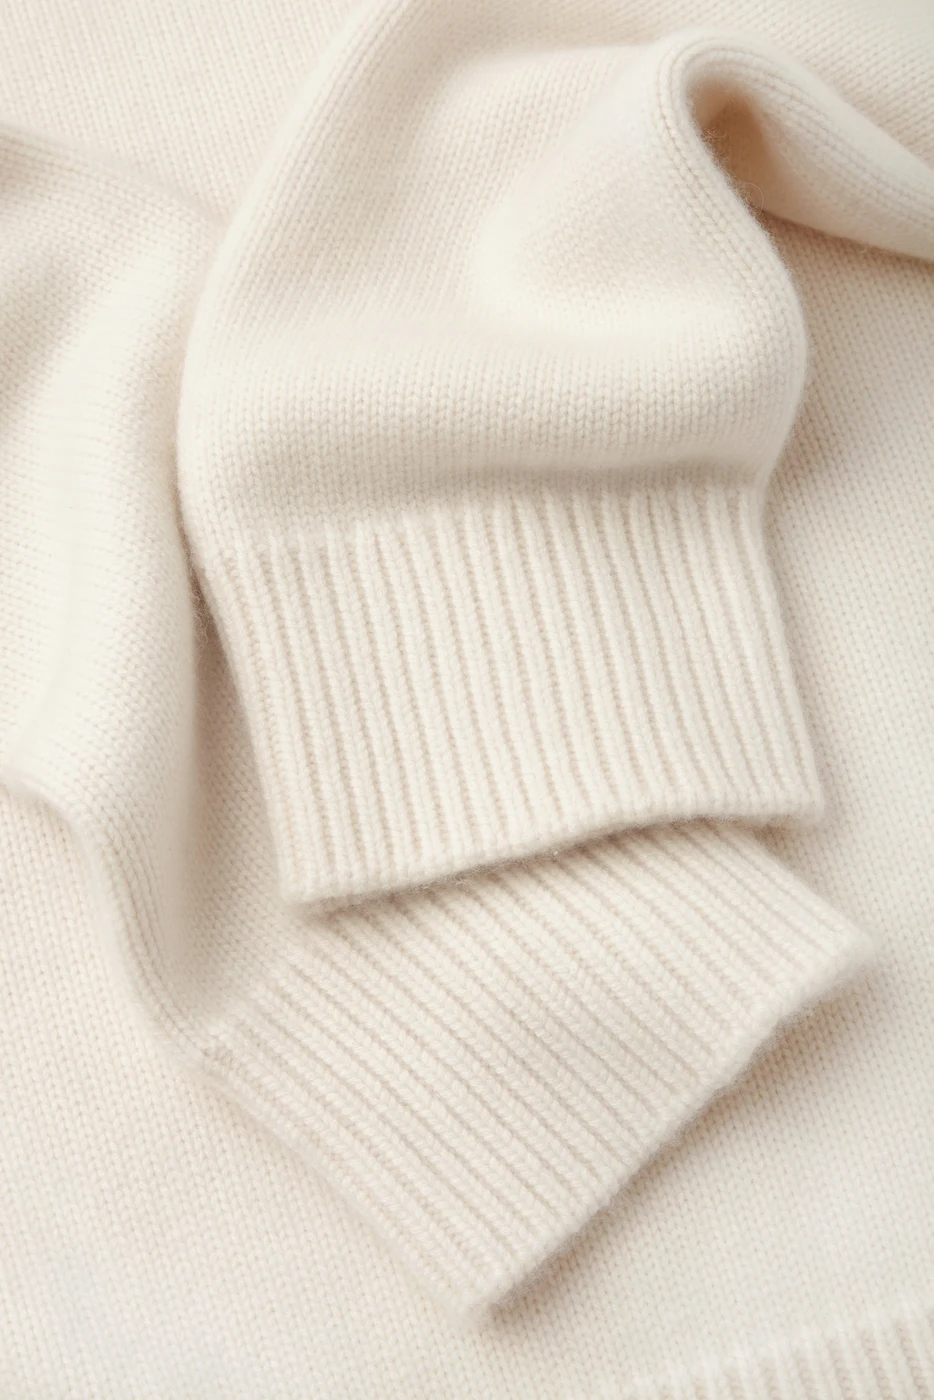 Fashion Wholesale Mongolian Erdos 100% Pure Knit Pullover Top Cashmere ...